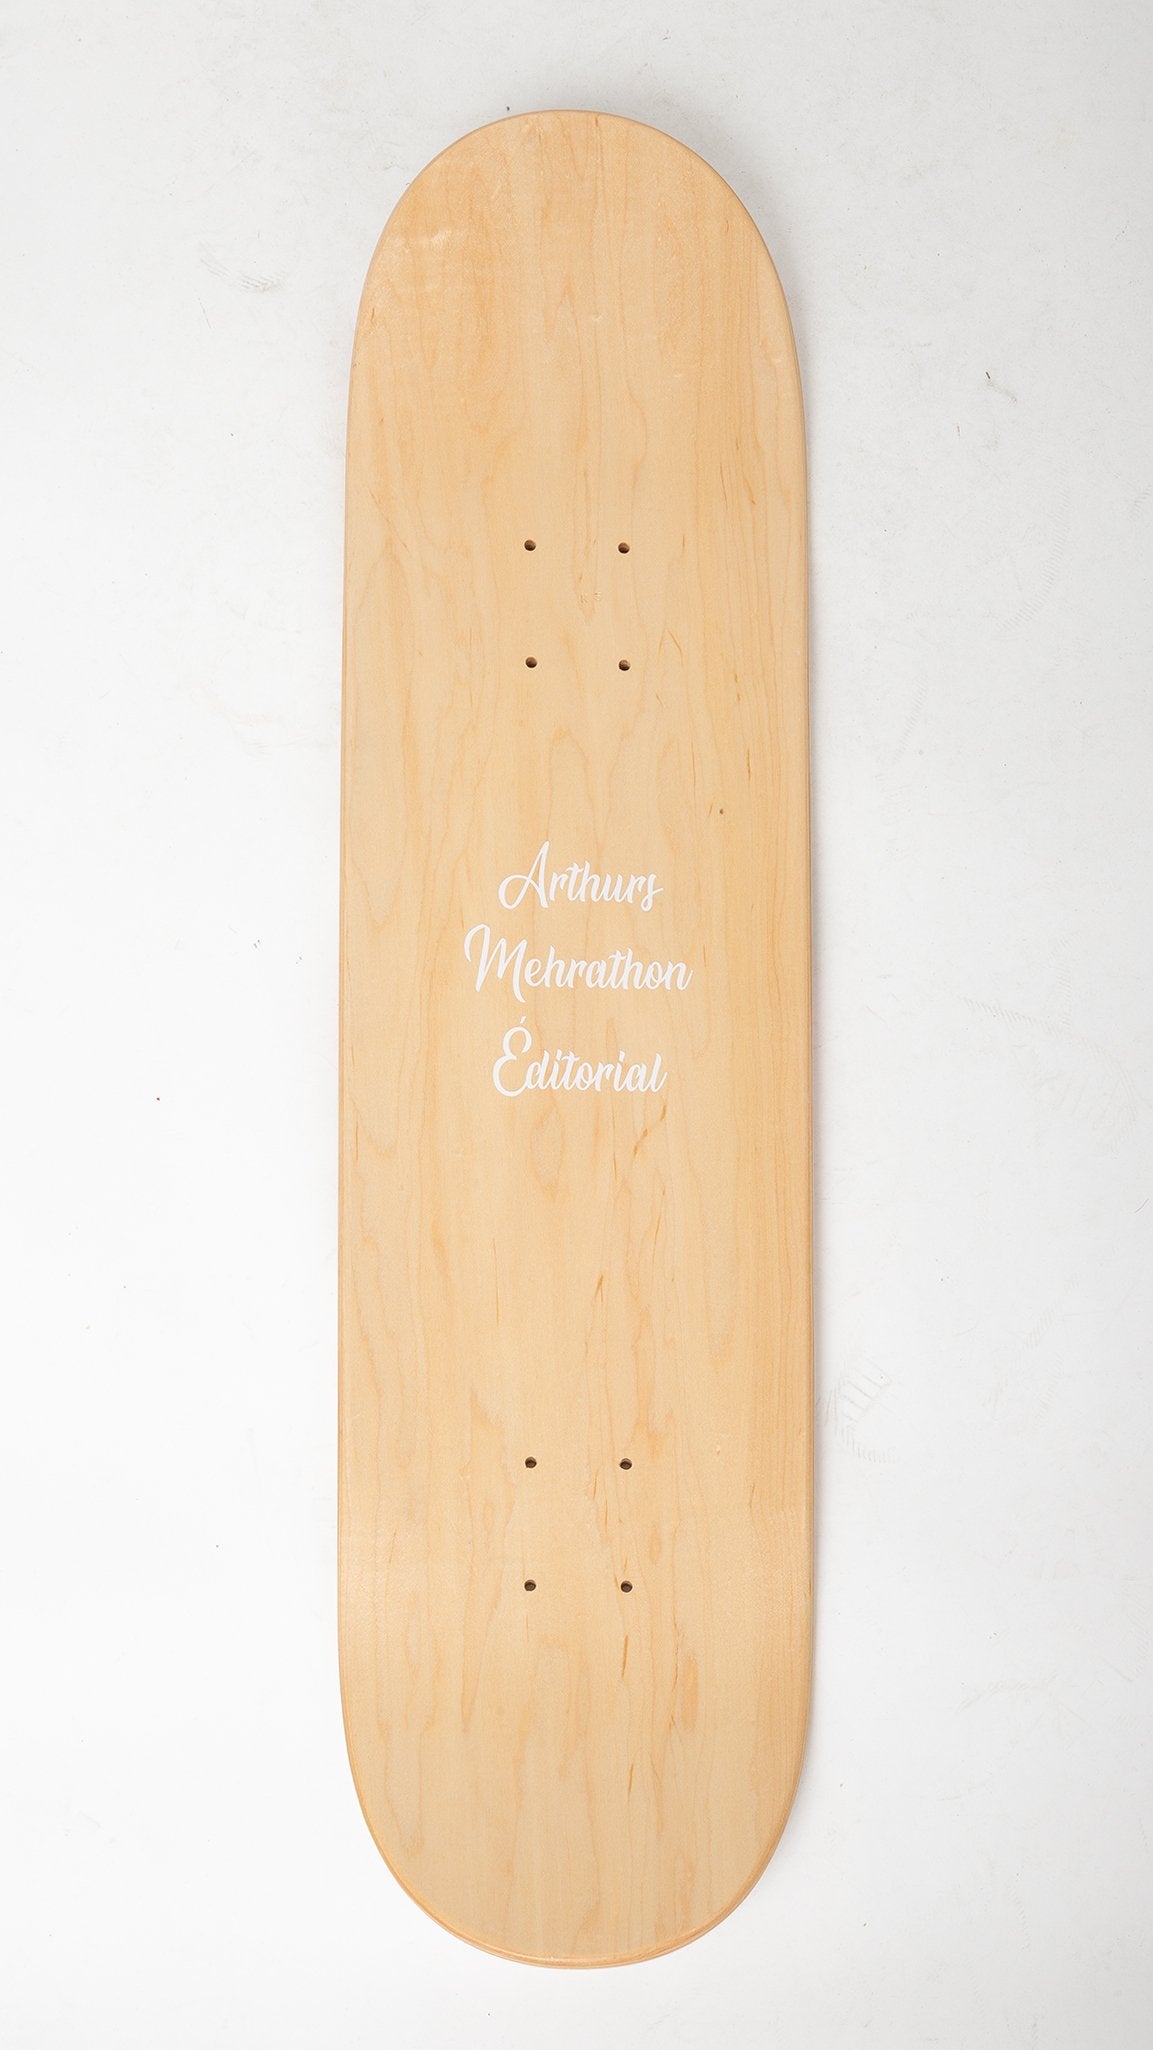 Editorial x Arthurs x Mehrathon Skateboard